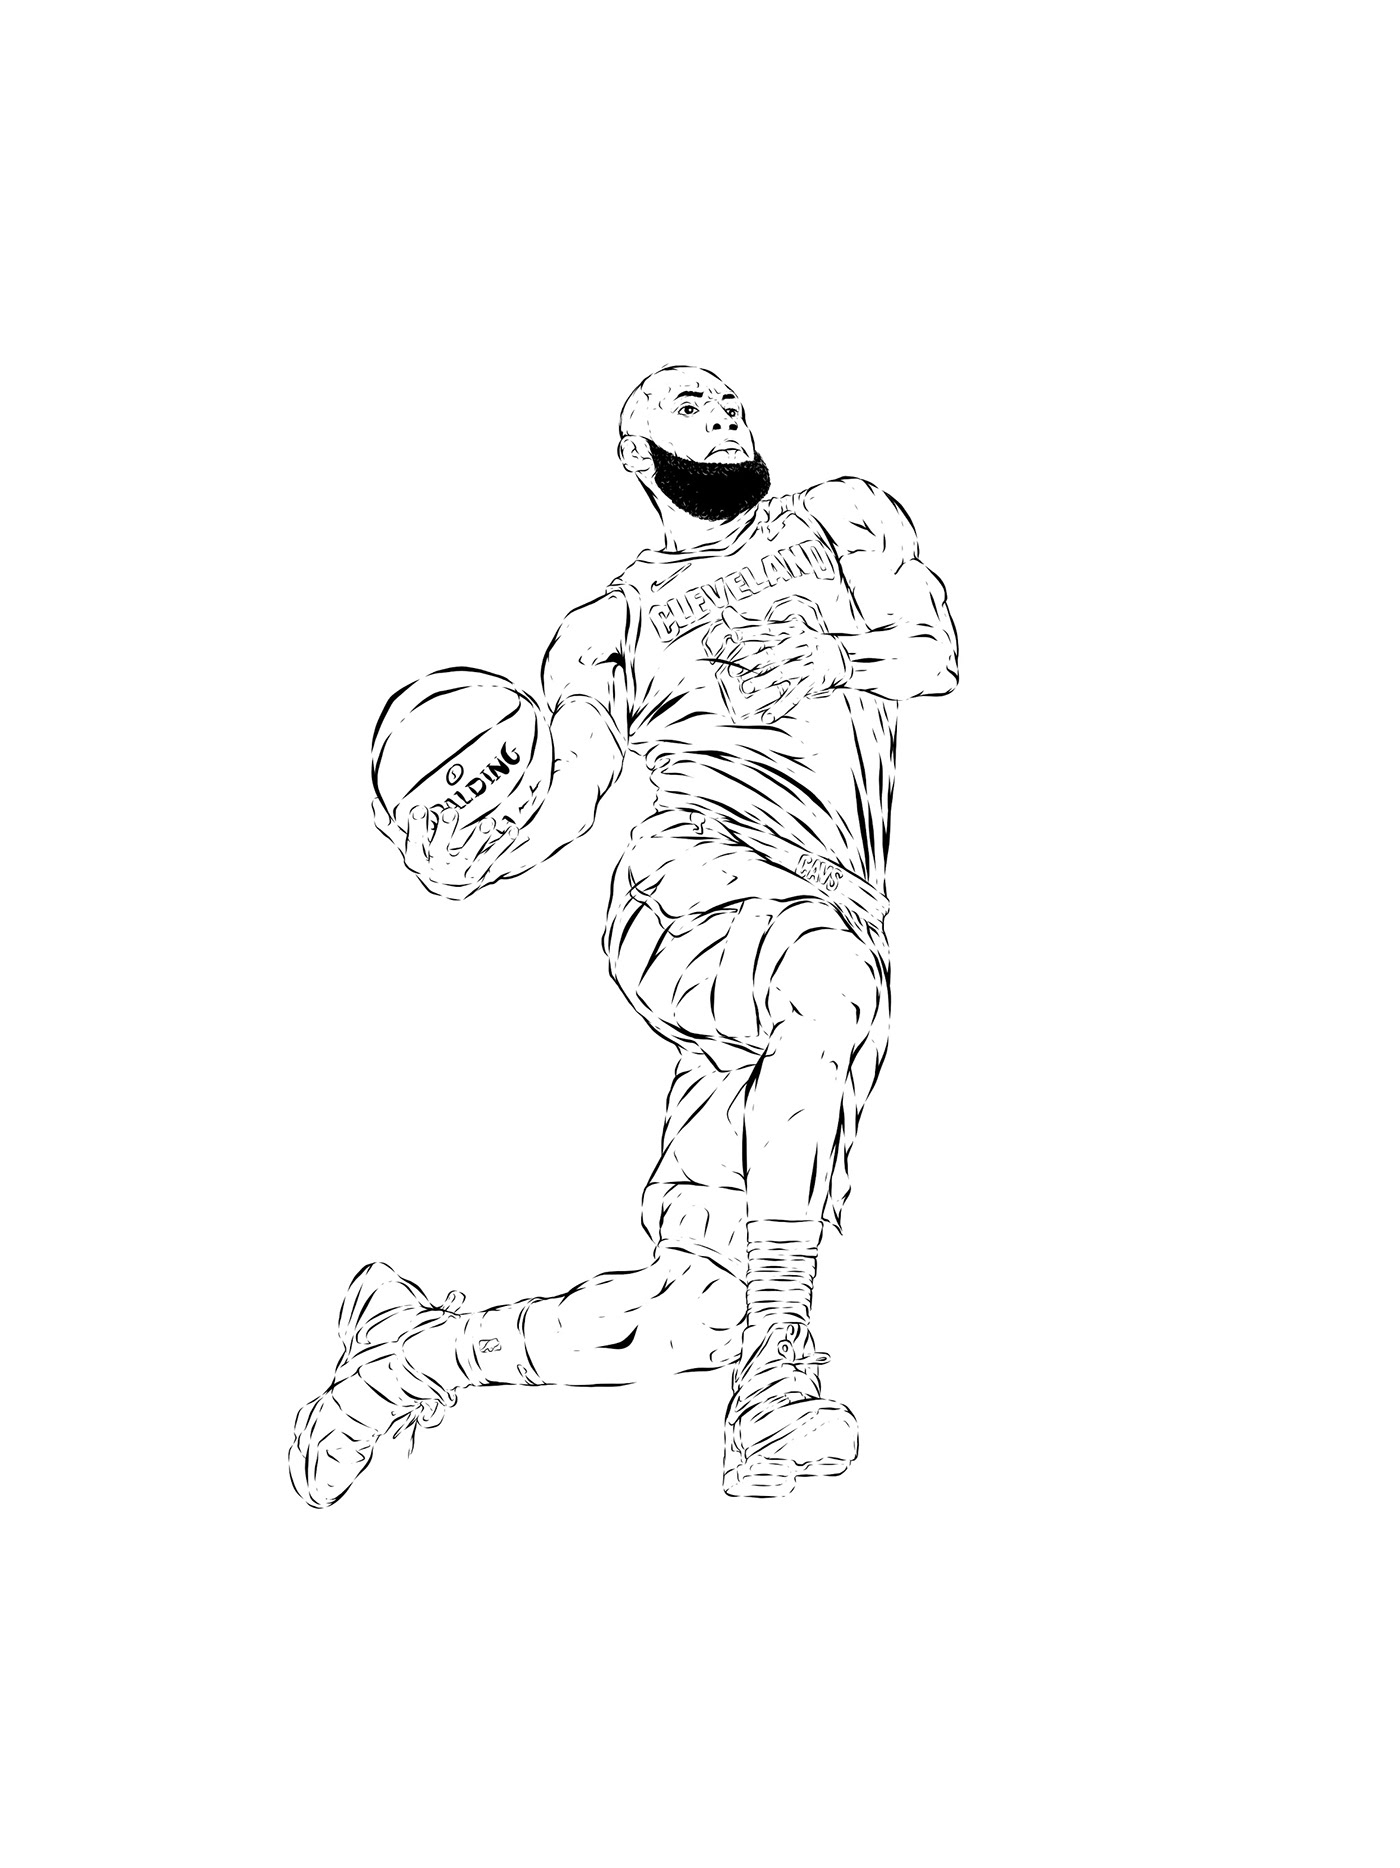 Adobe DRAW : NBA series - Lebron James.